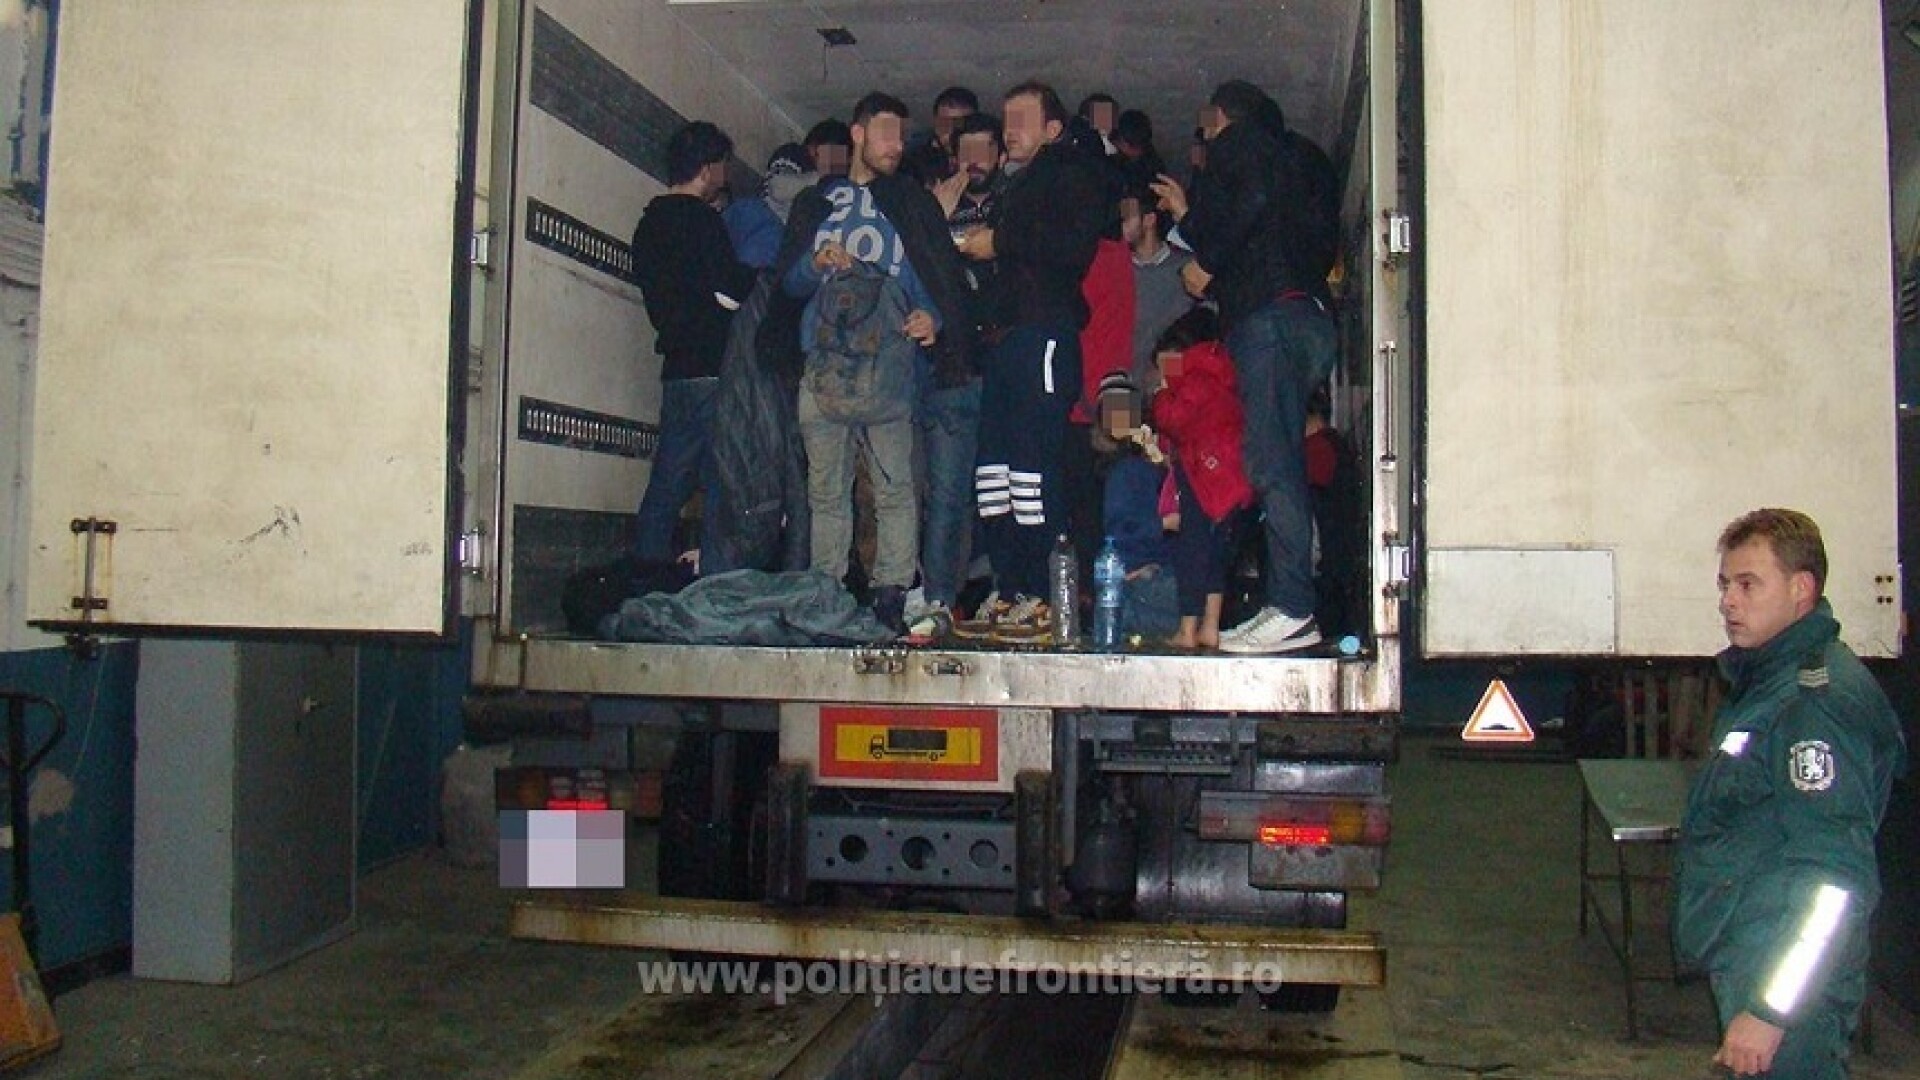 camion cu refugiati irakieni